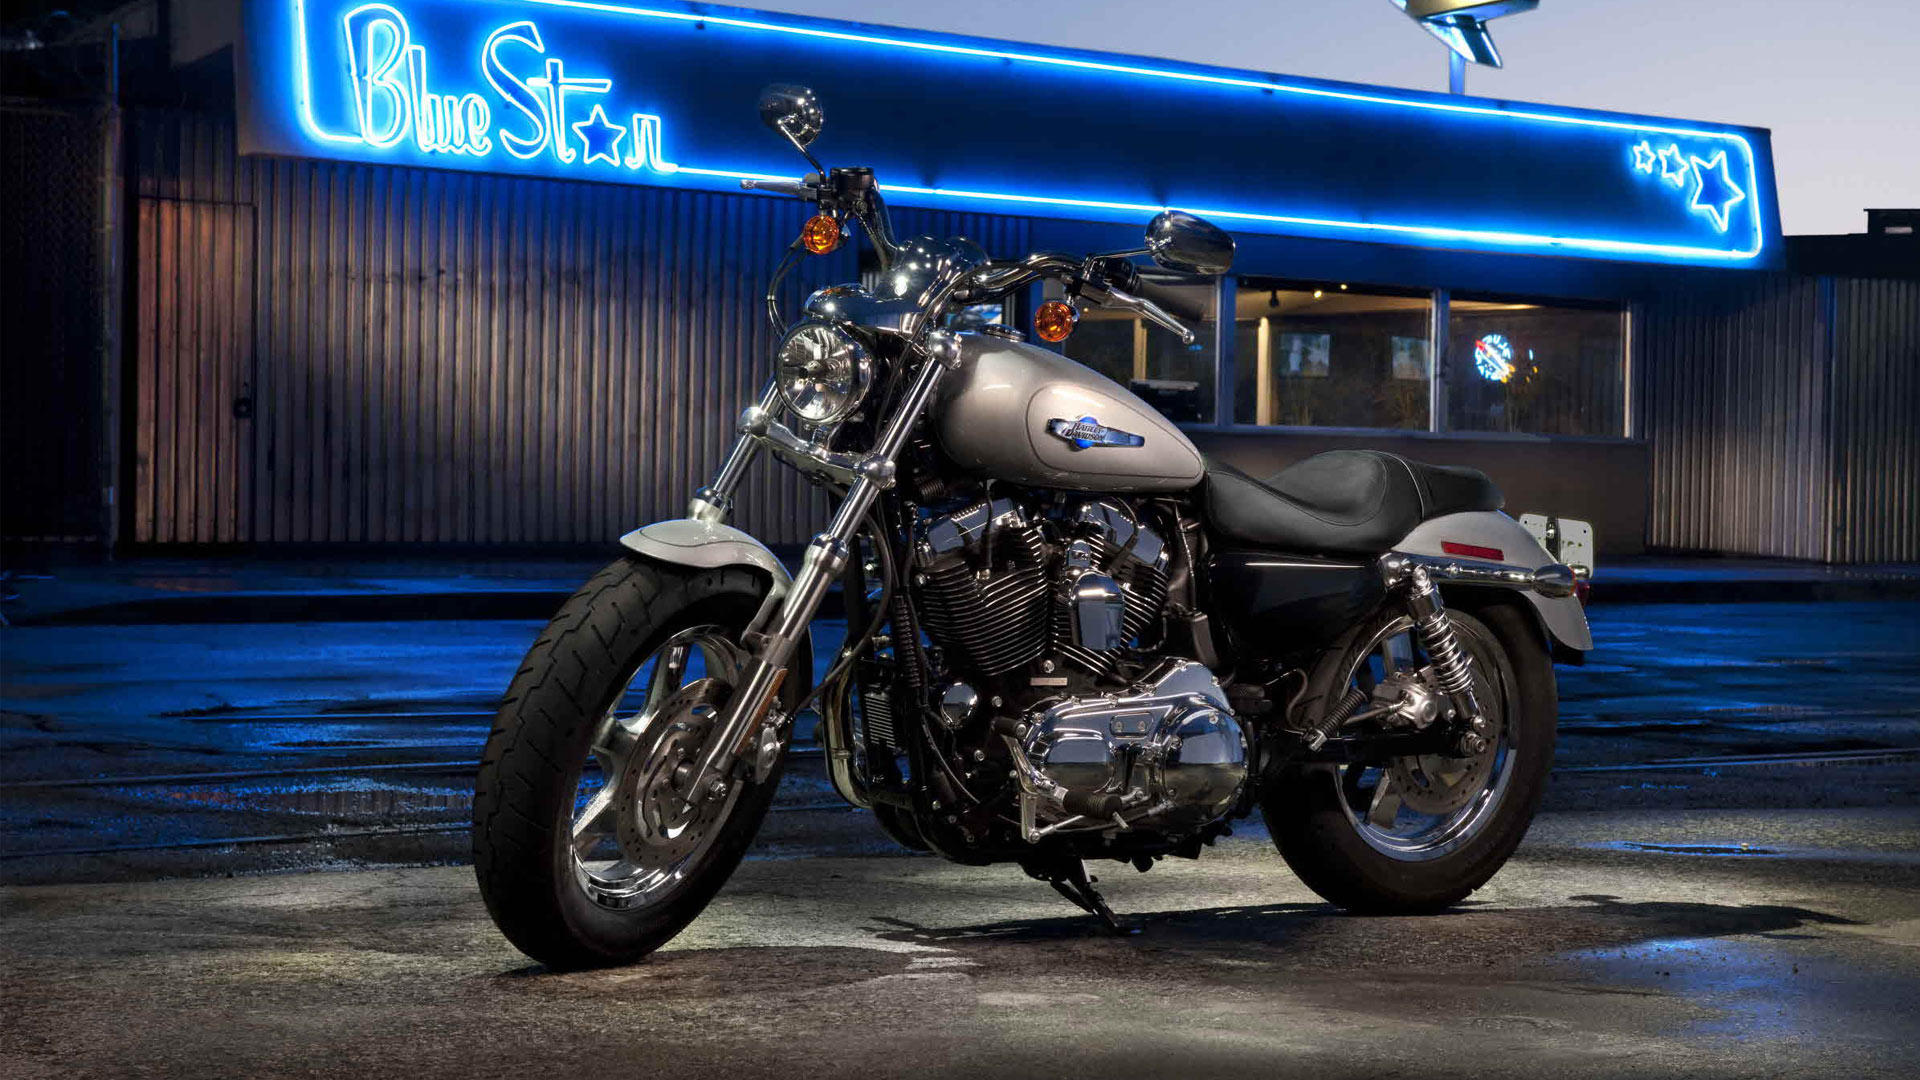 Harley Davidson Motorcycles New Tab Theme